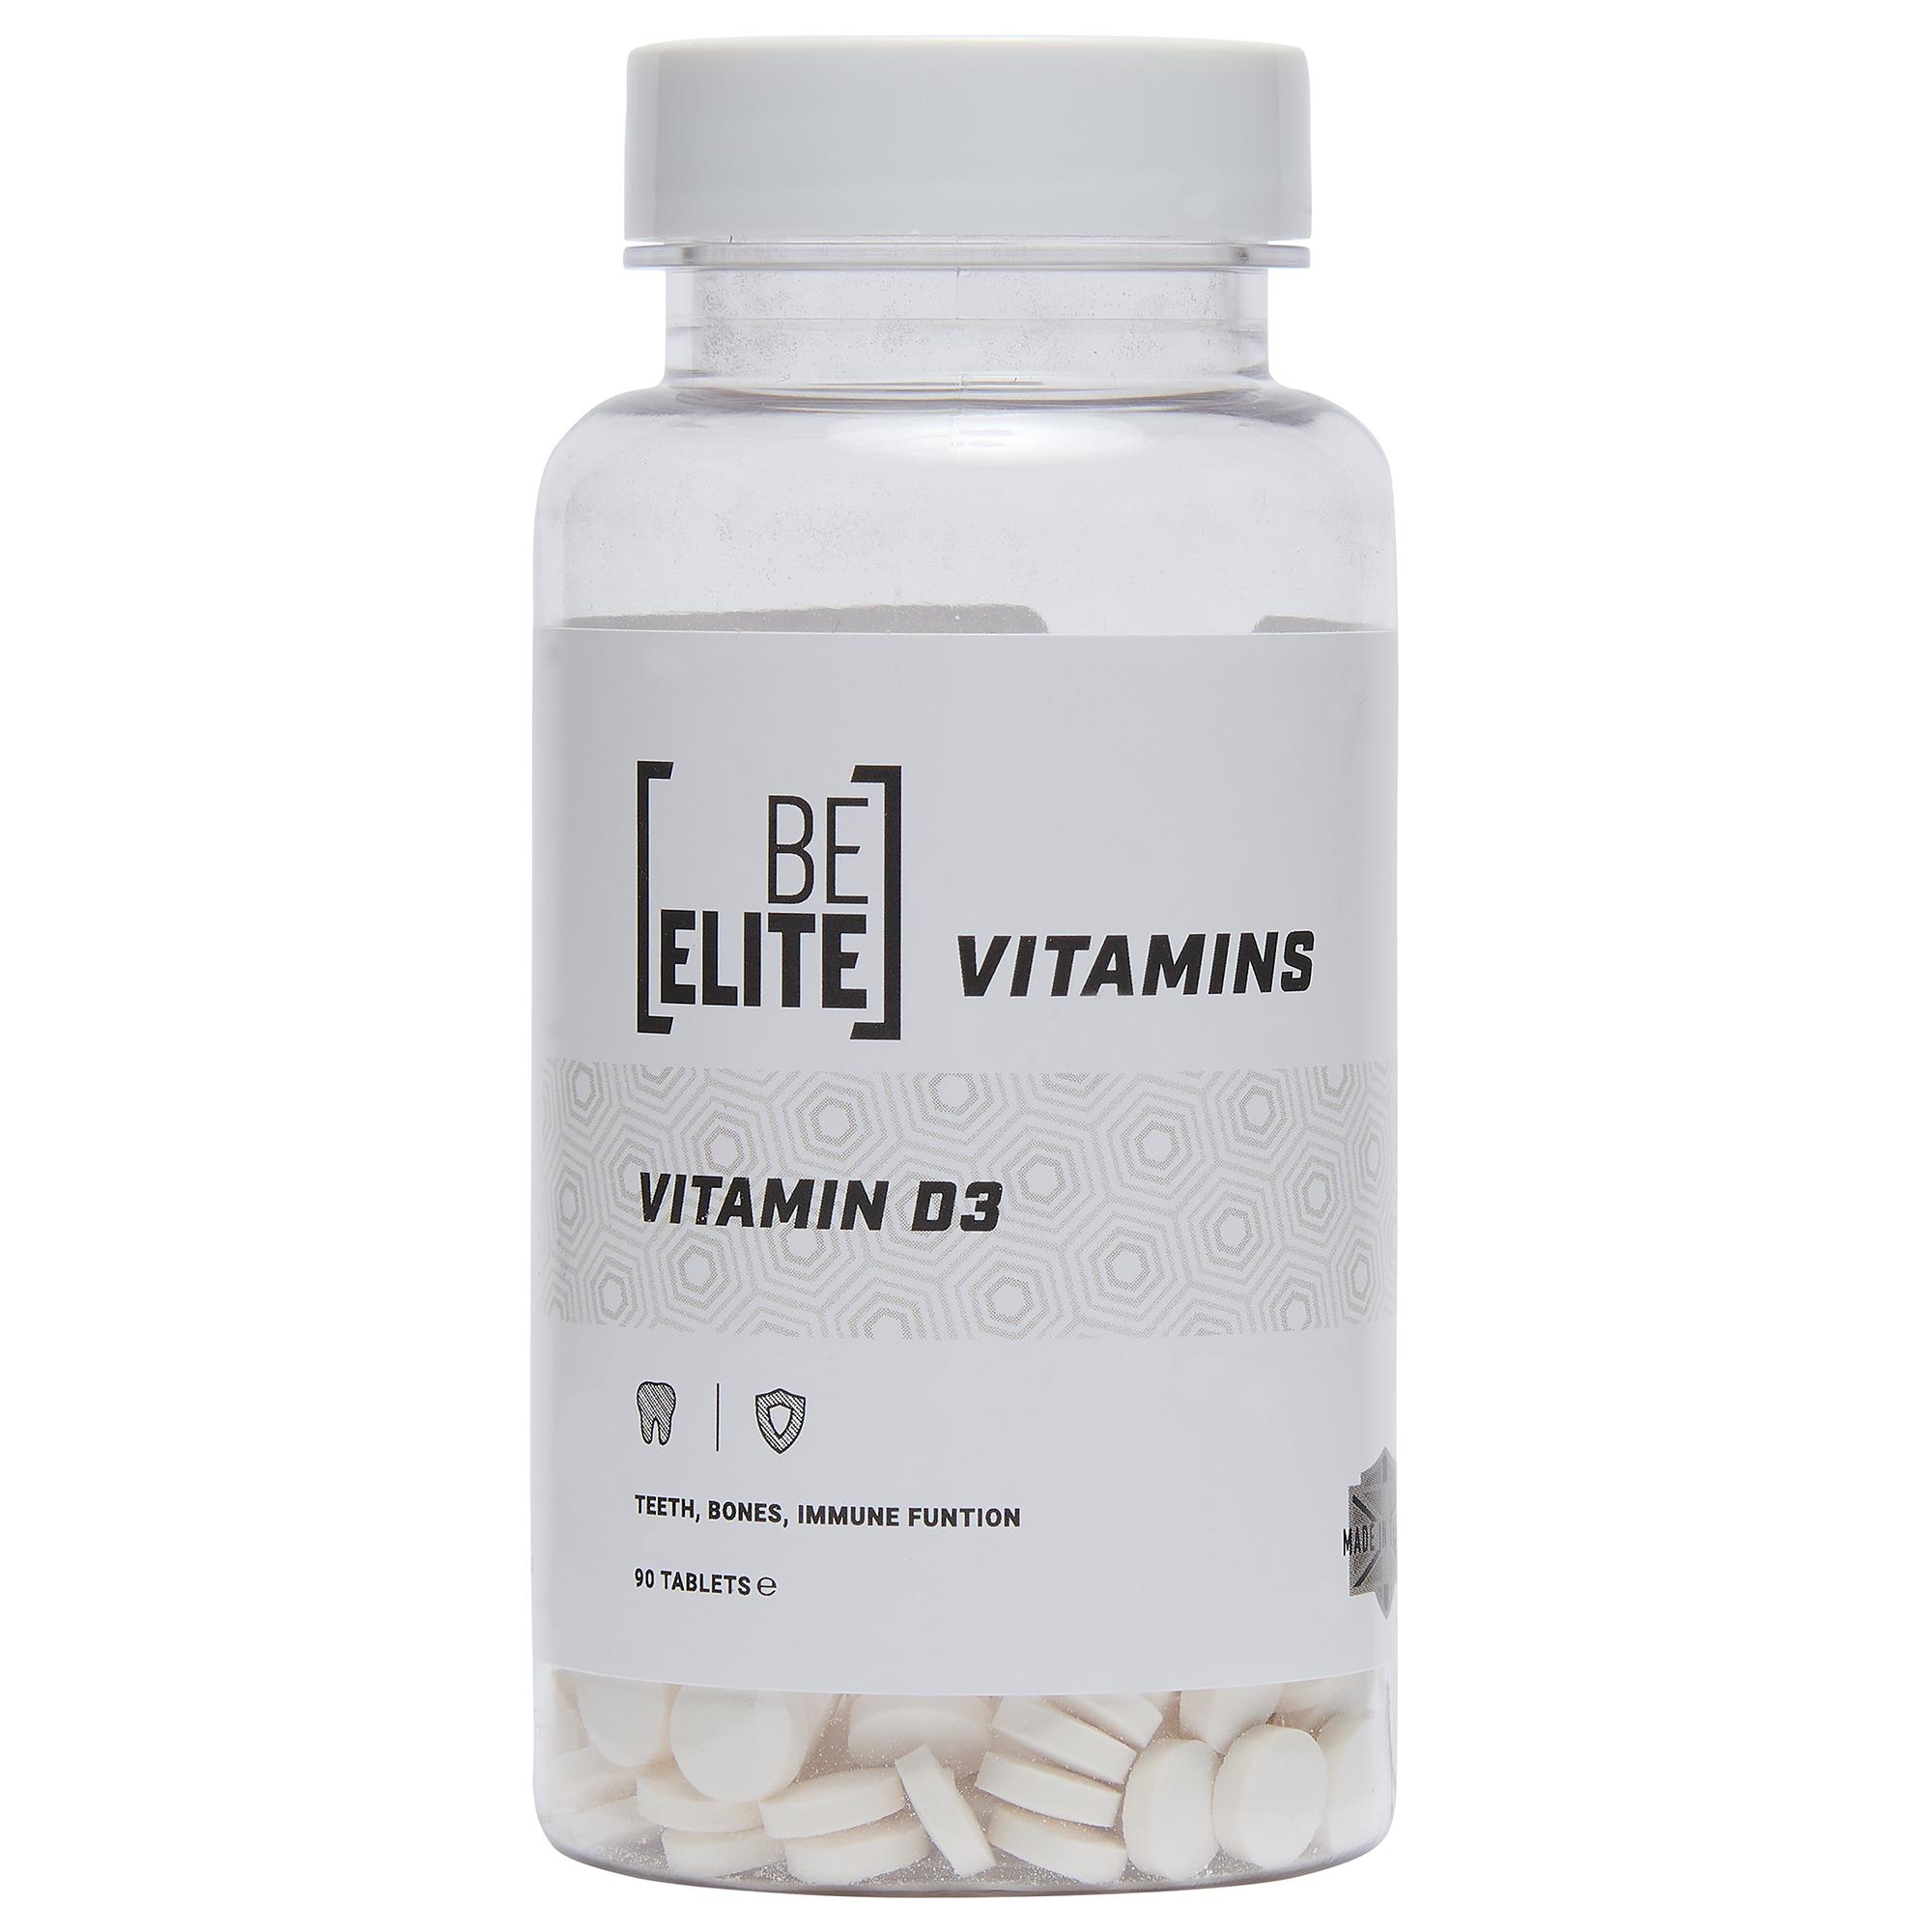 Beelite Vitamin D3 Tablets (60 Tablets)